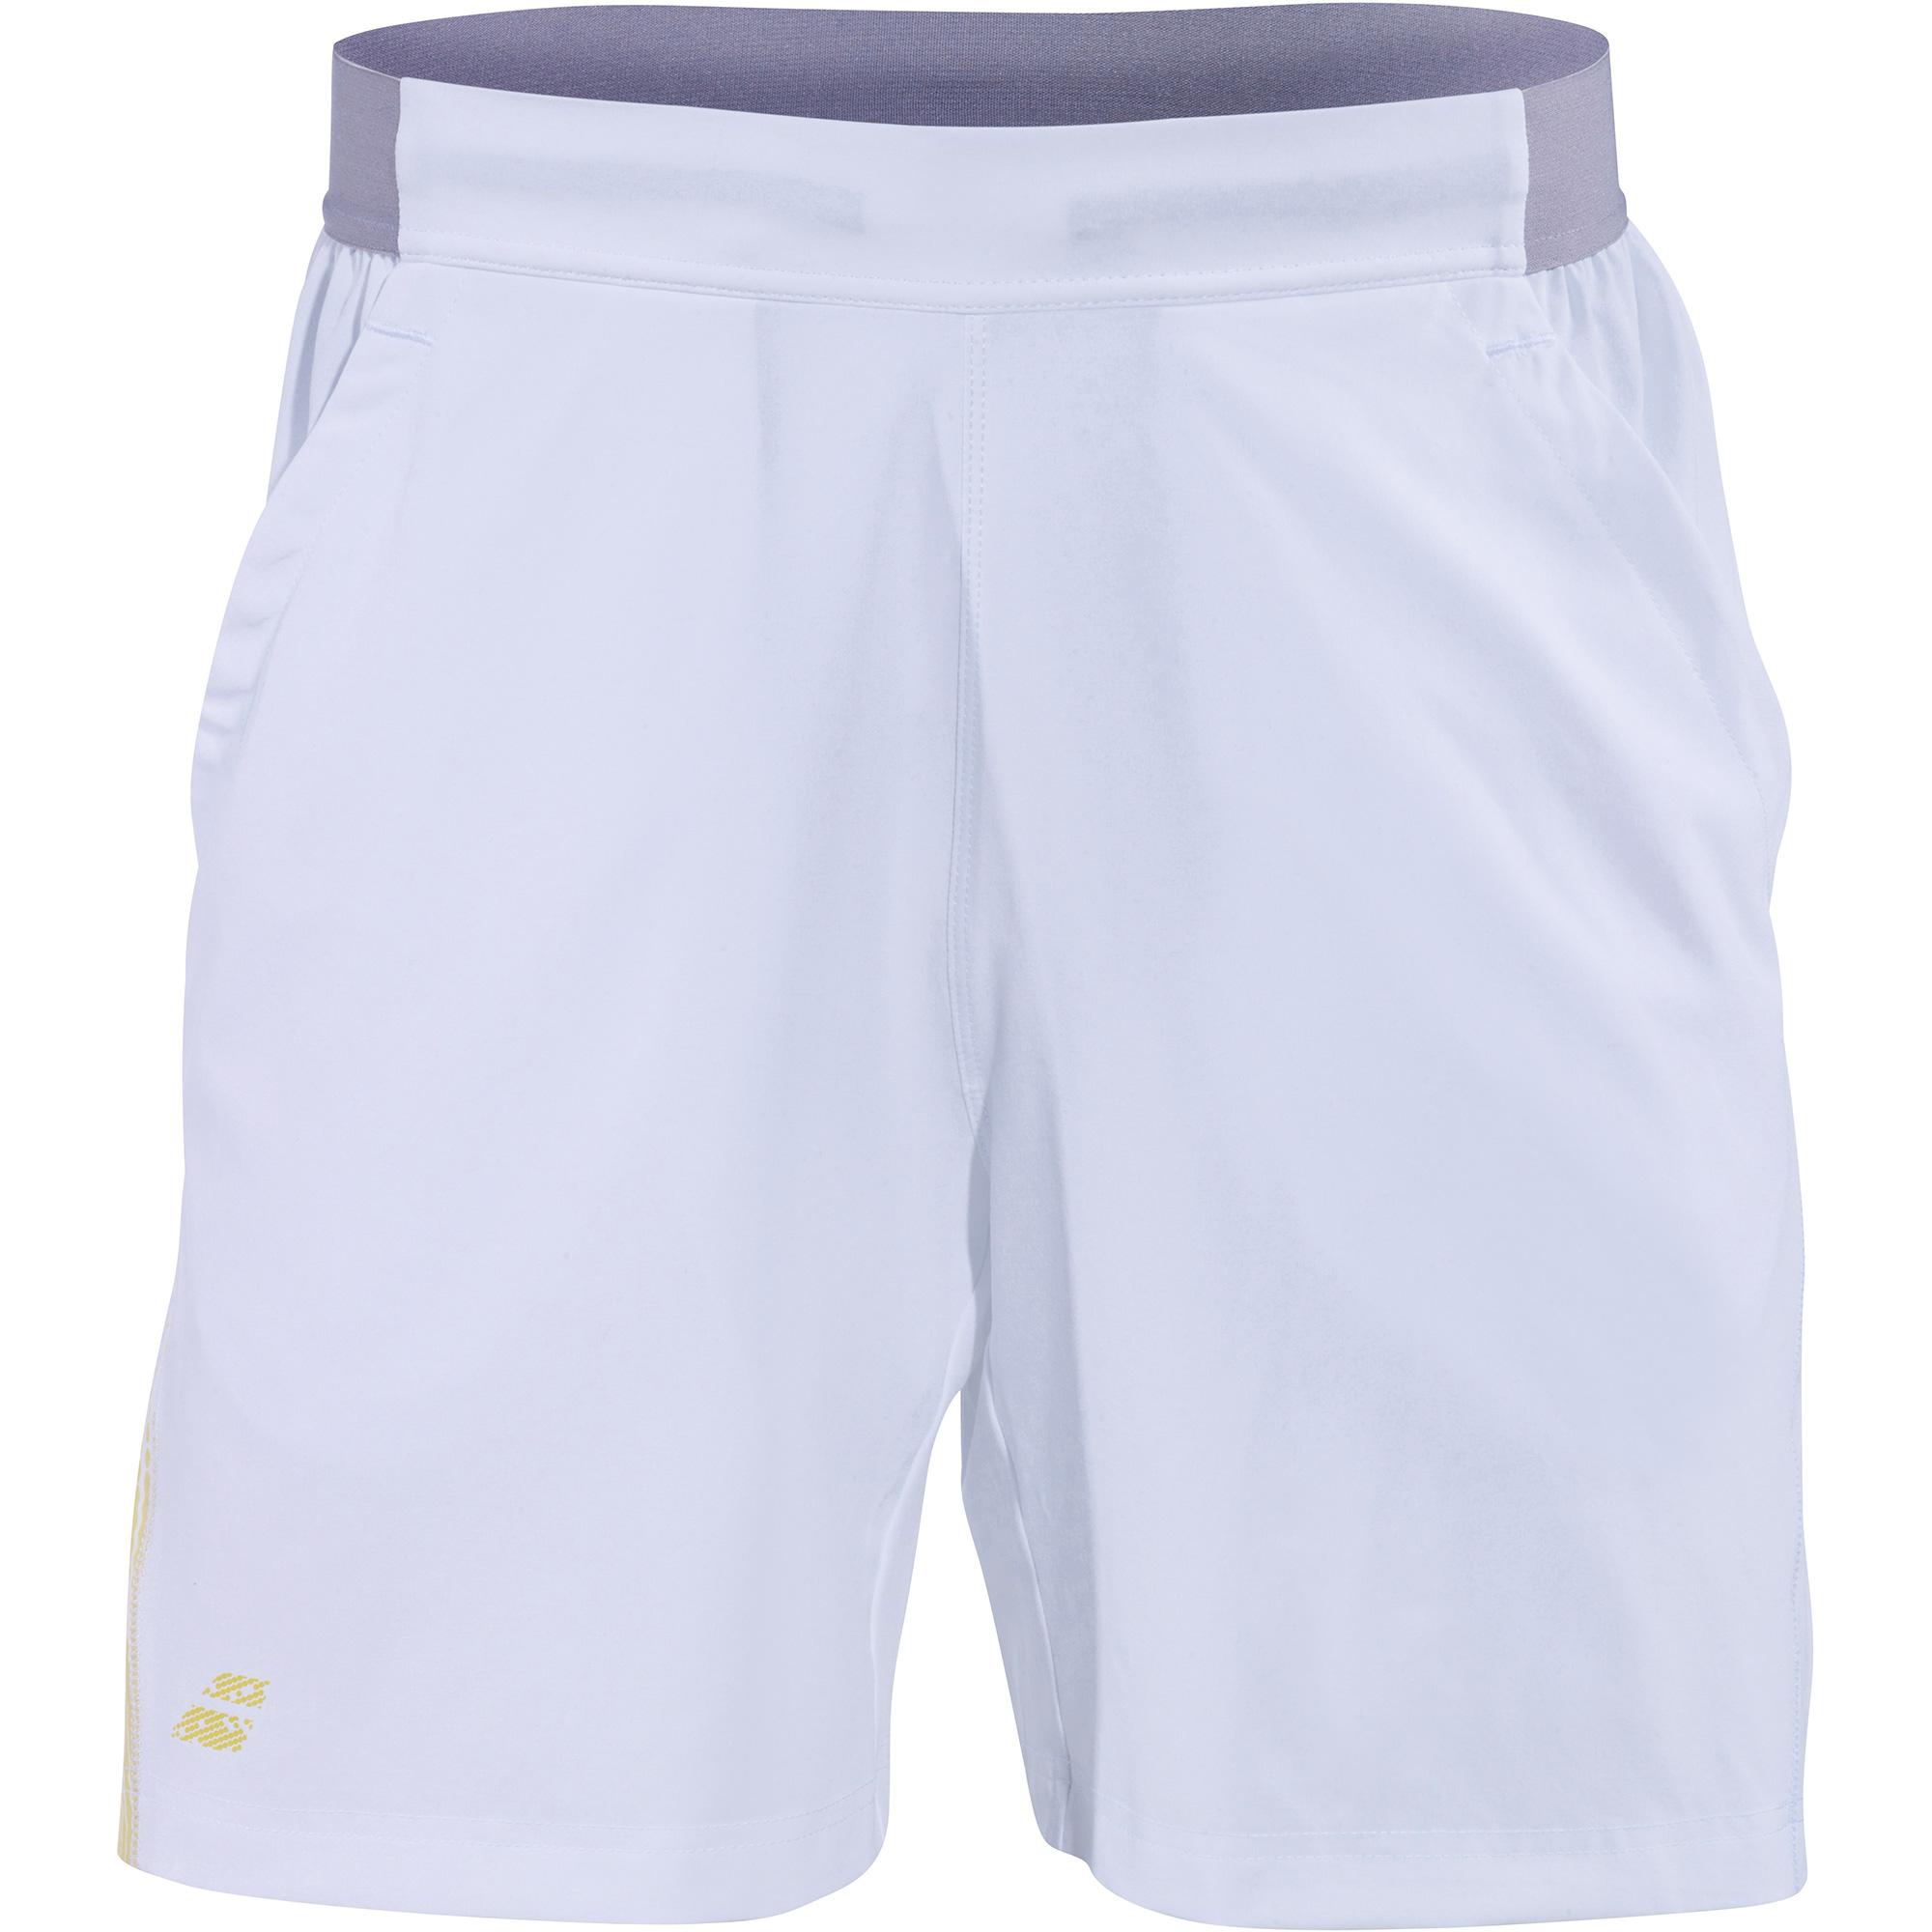 Babolat Core Pantalones cortos de tenis para hombre color gris 8